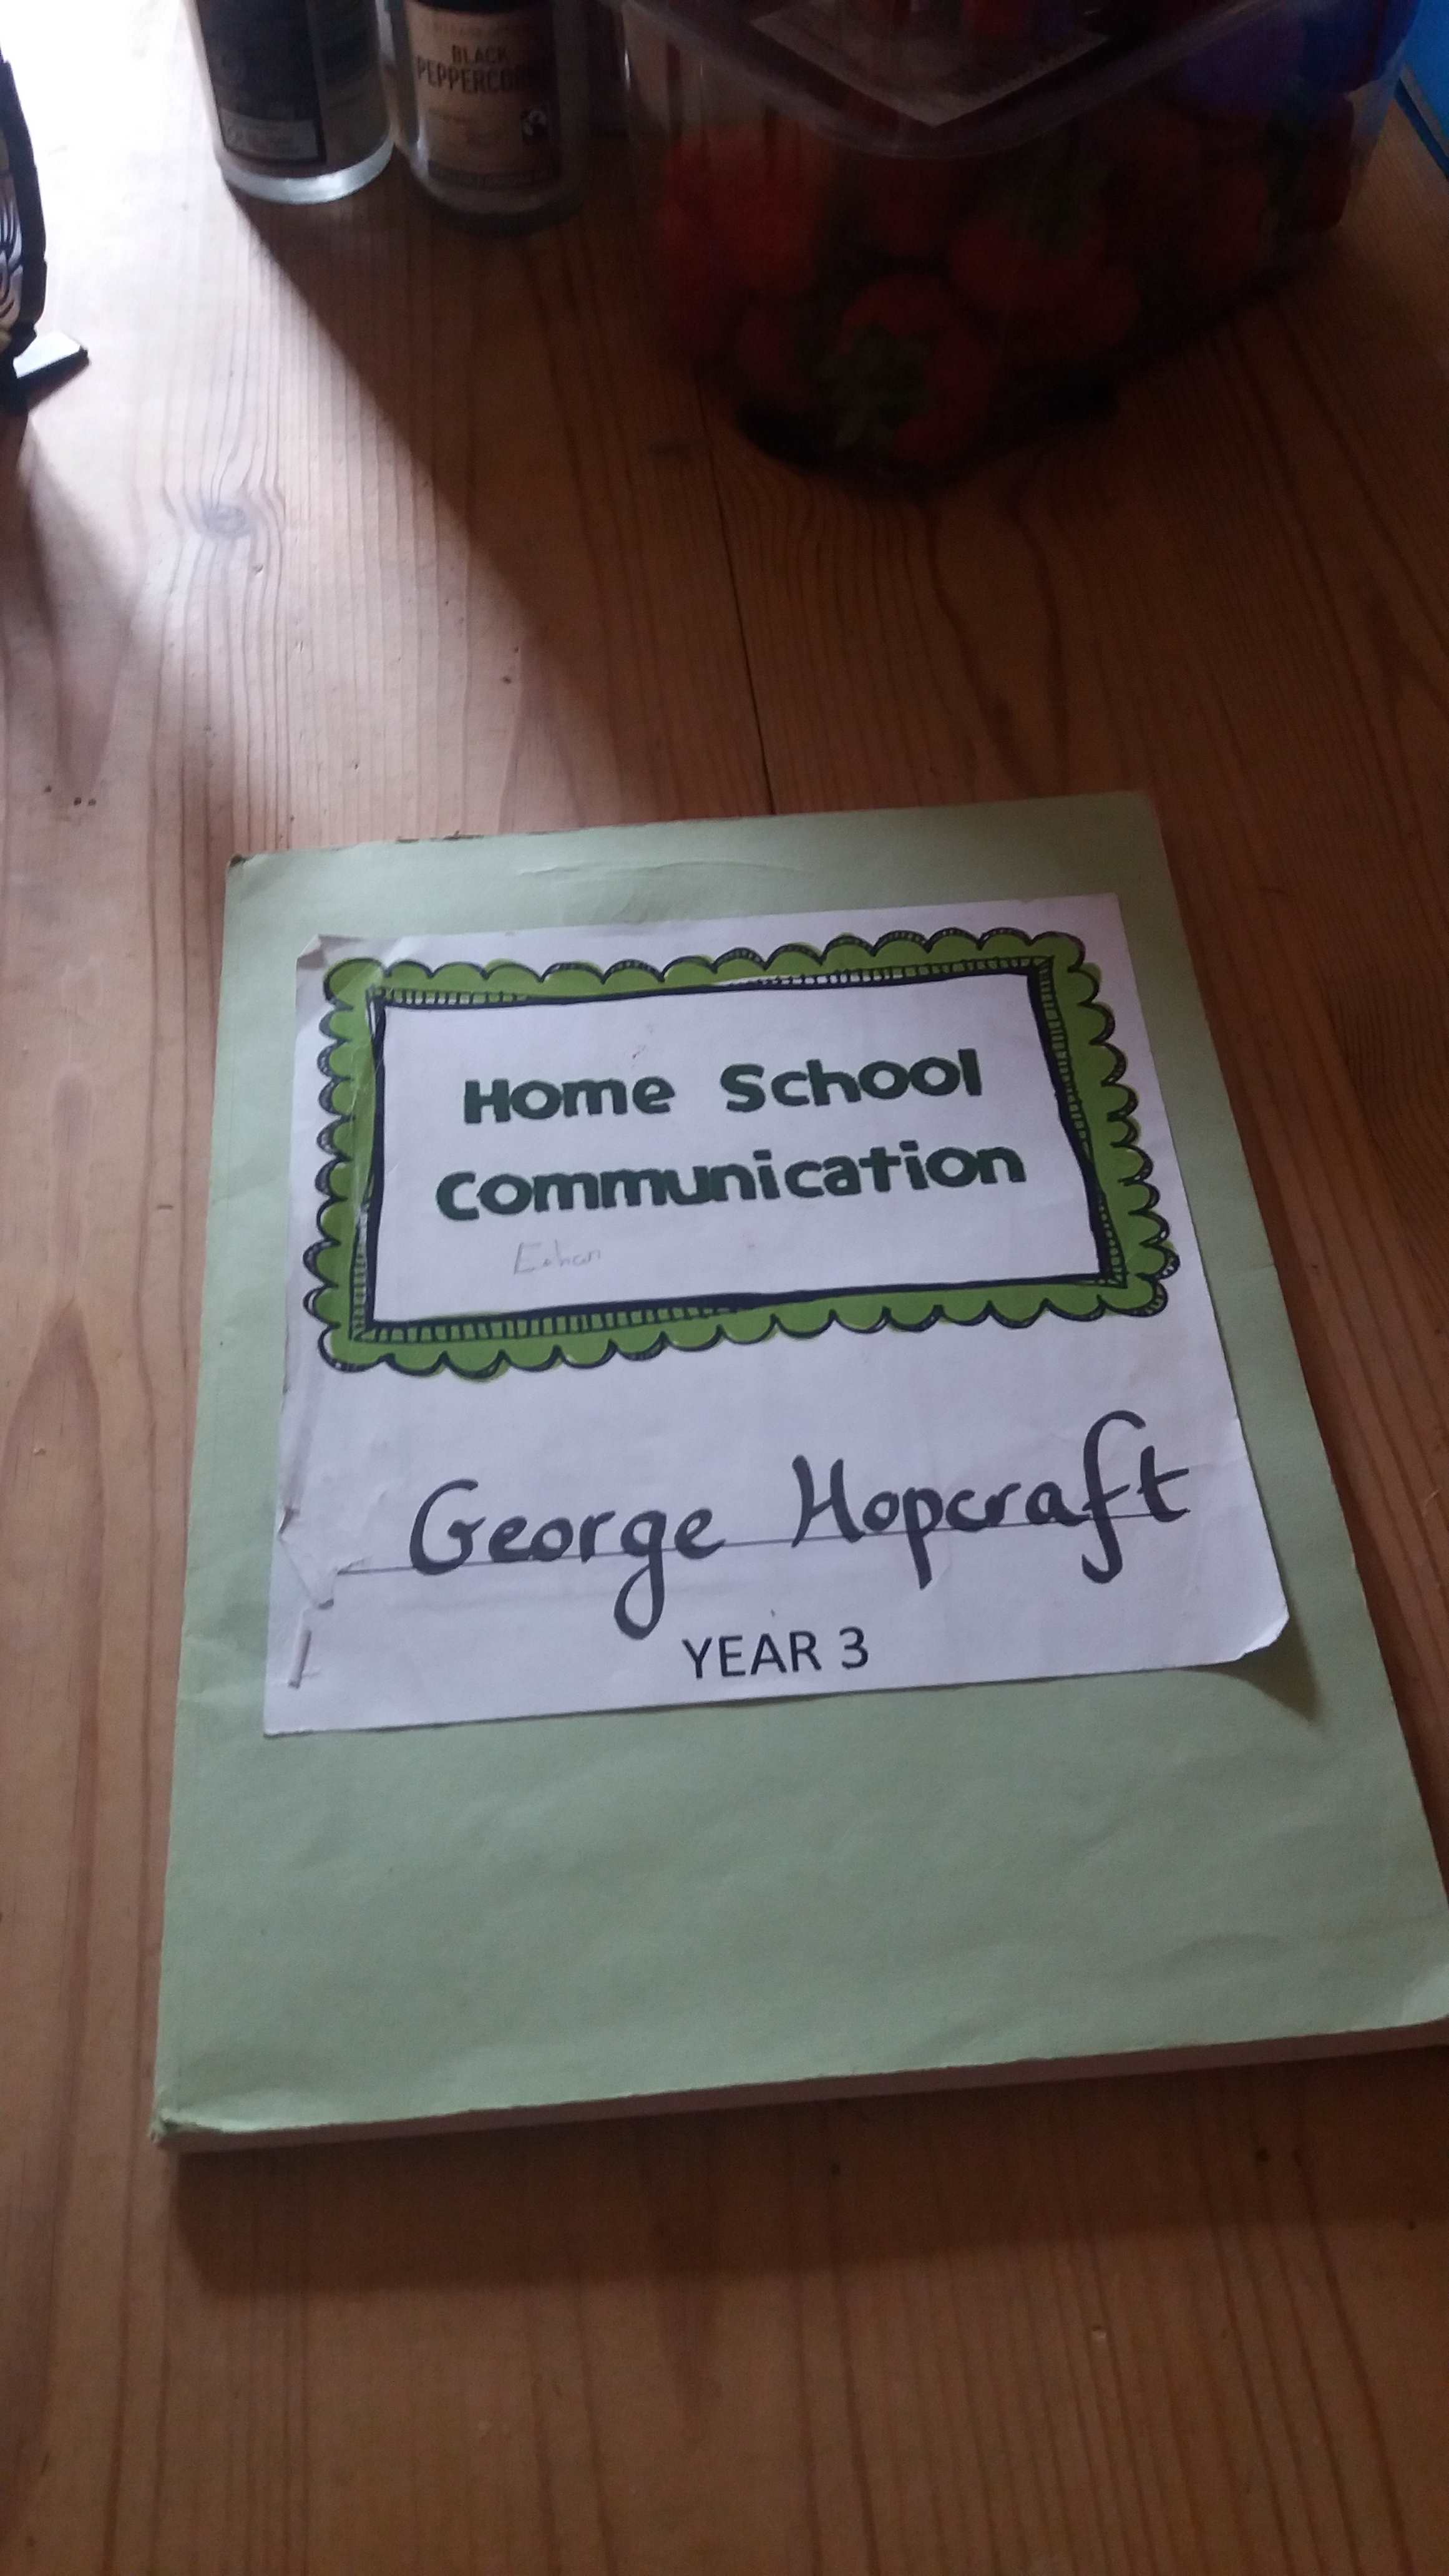 Home School Communication